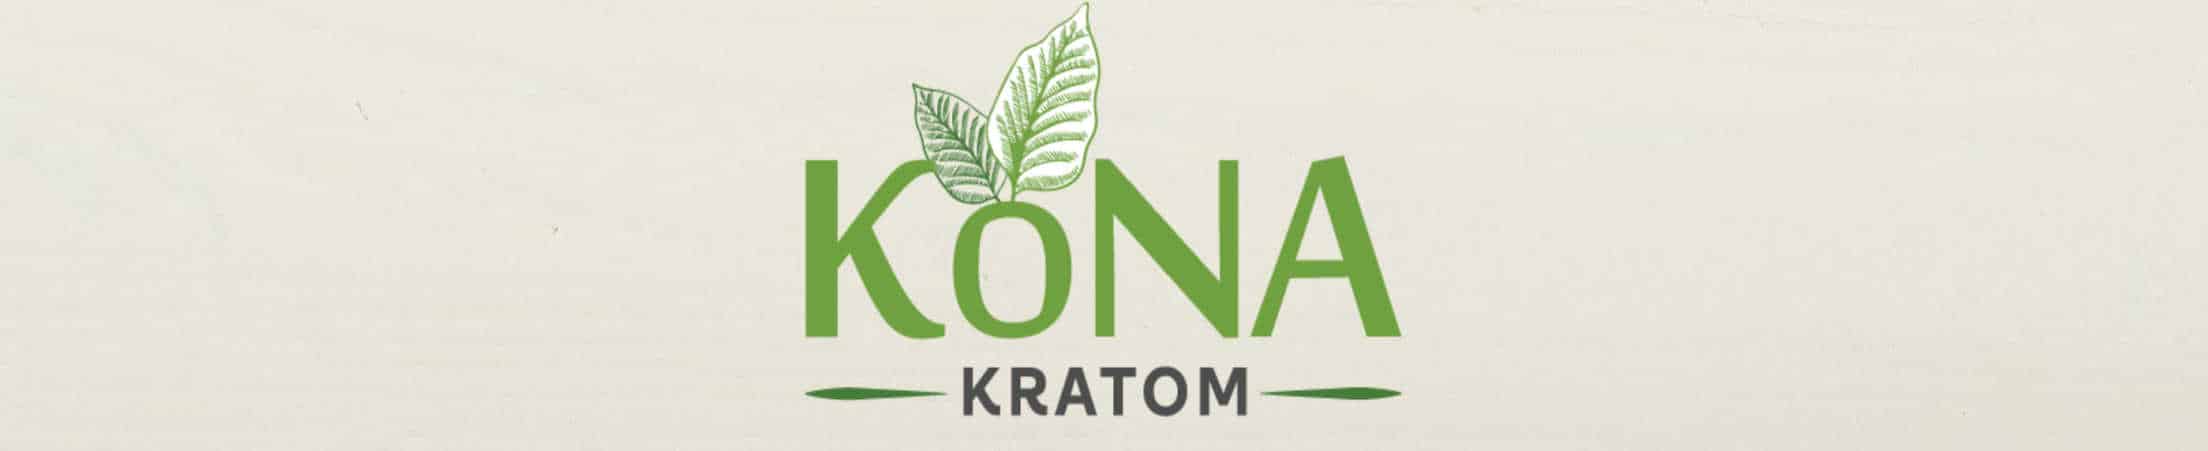 image of kona kratom